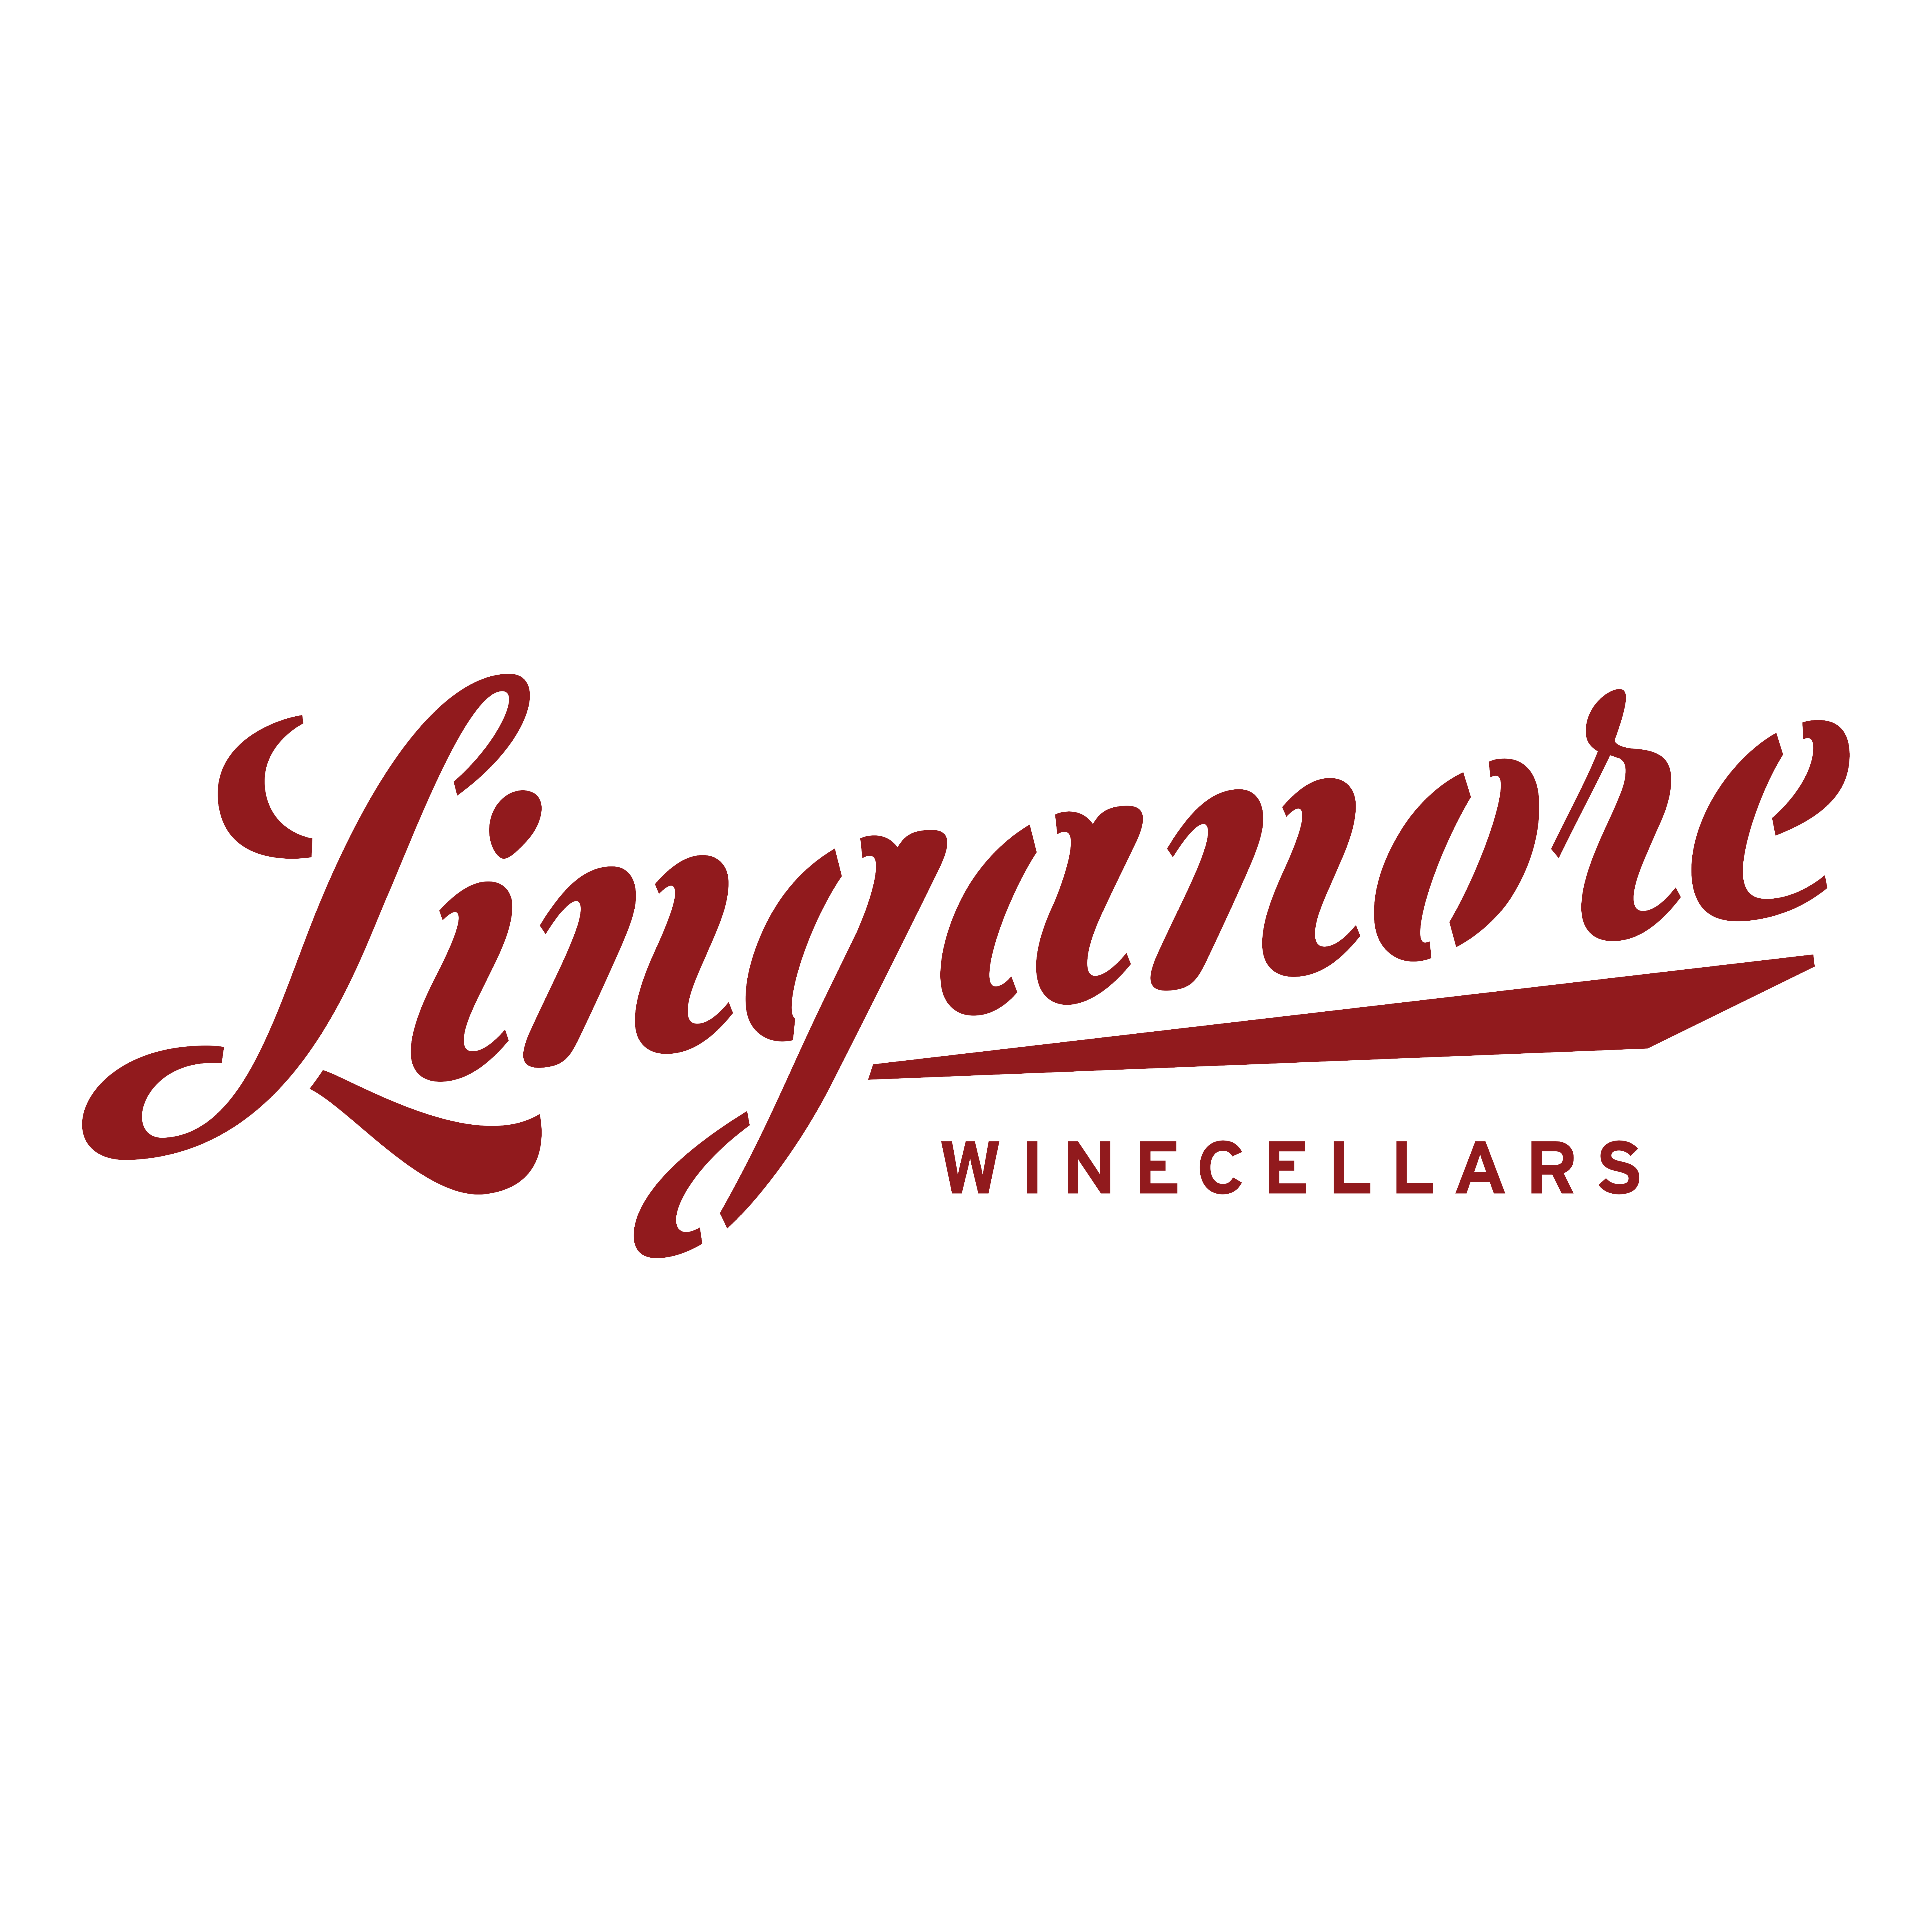 Linganore Winecellars logo